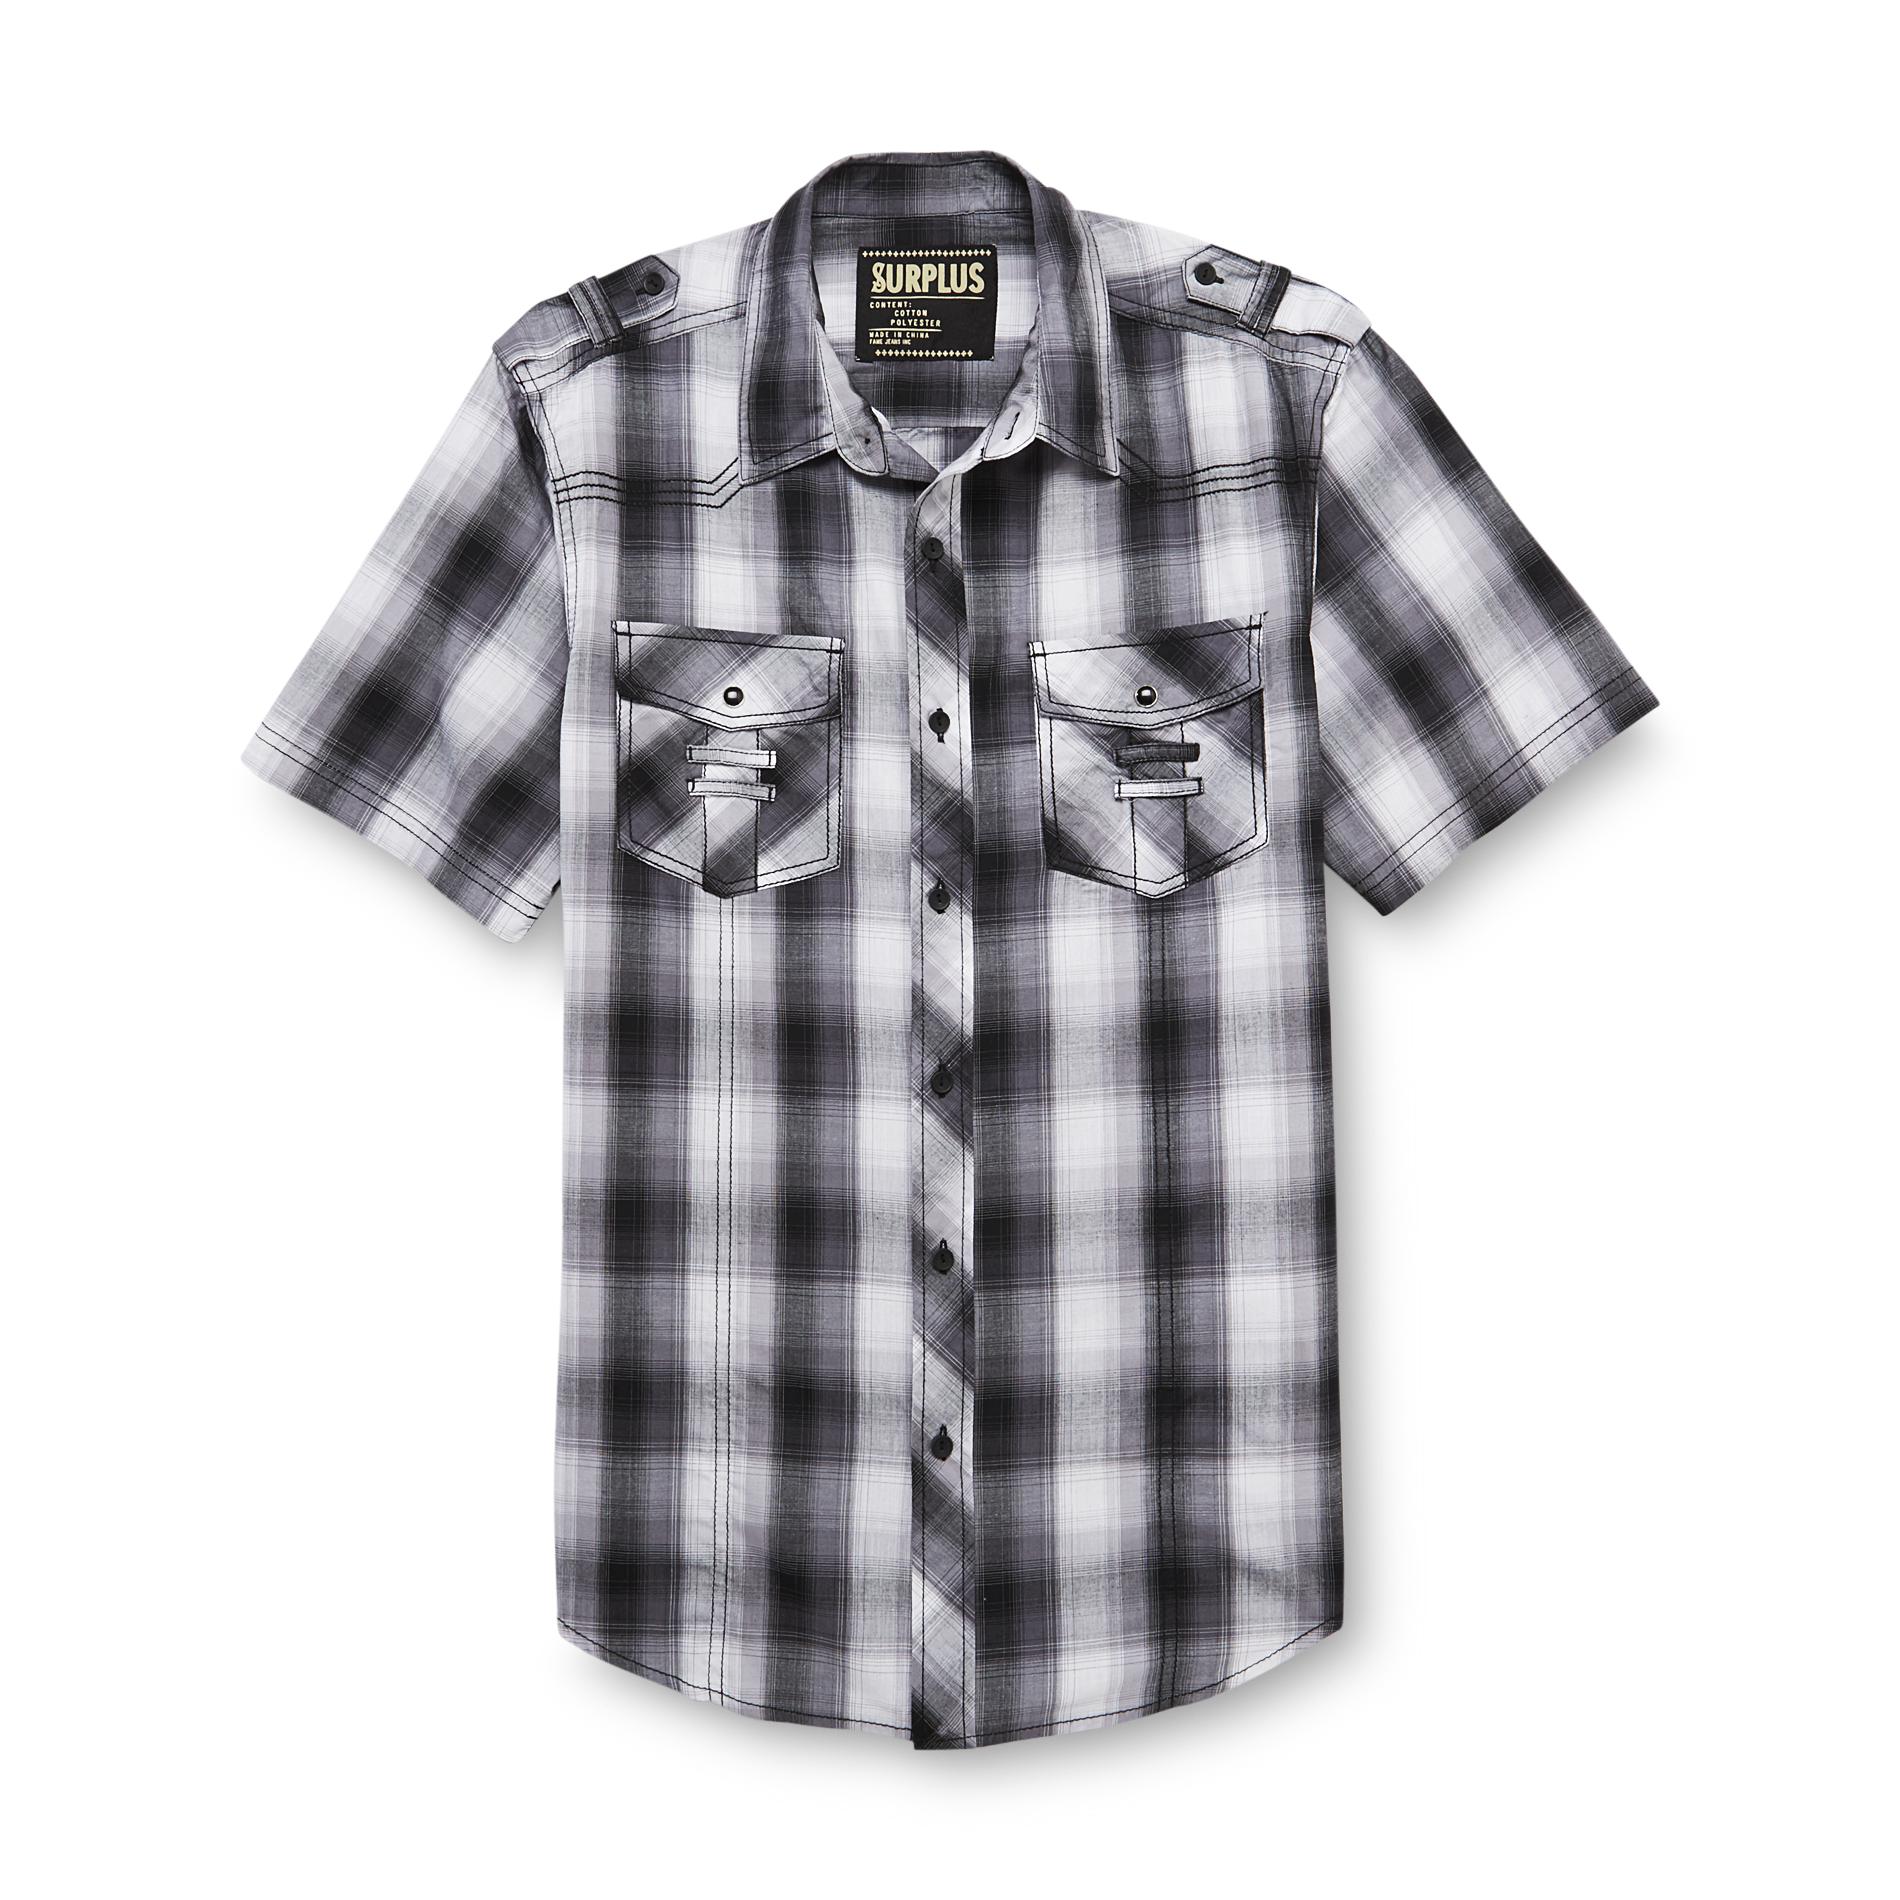 Machine Young Men's Short-Sleeve Button-Front Shirt - Plaid